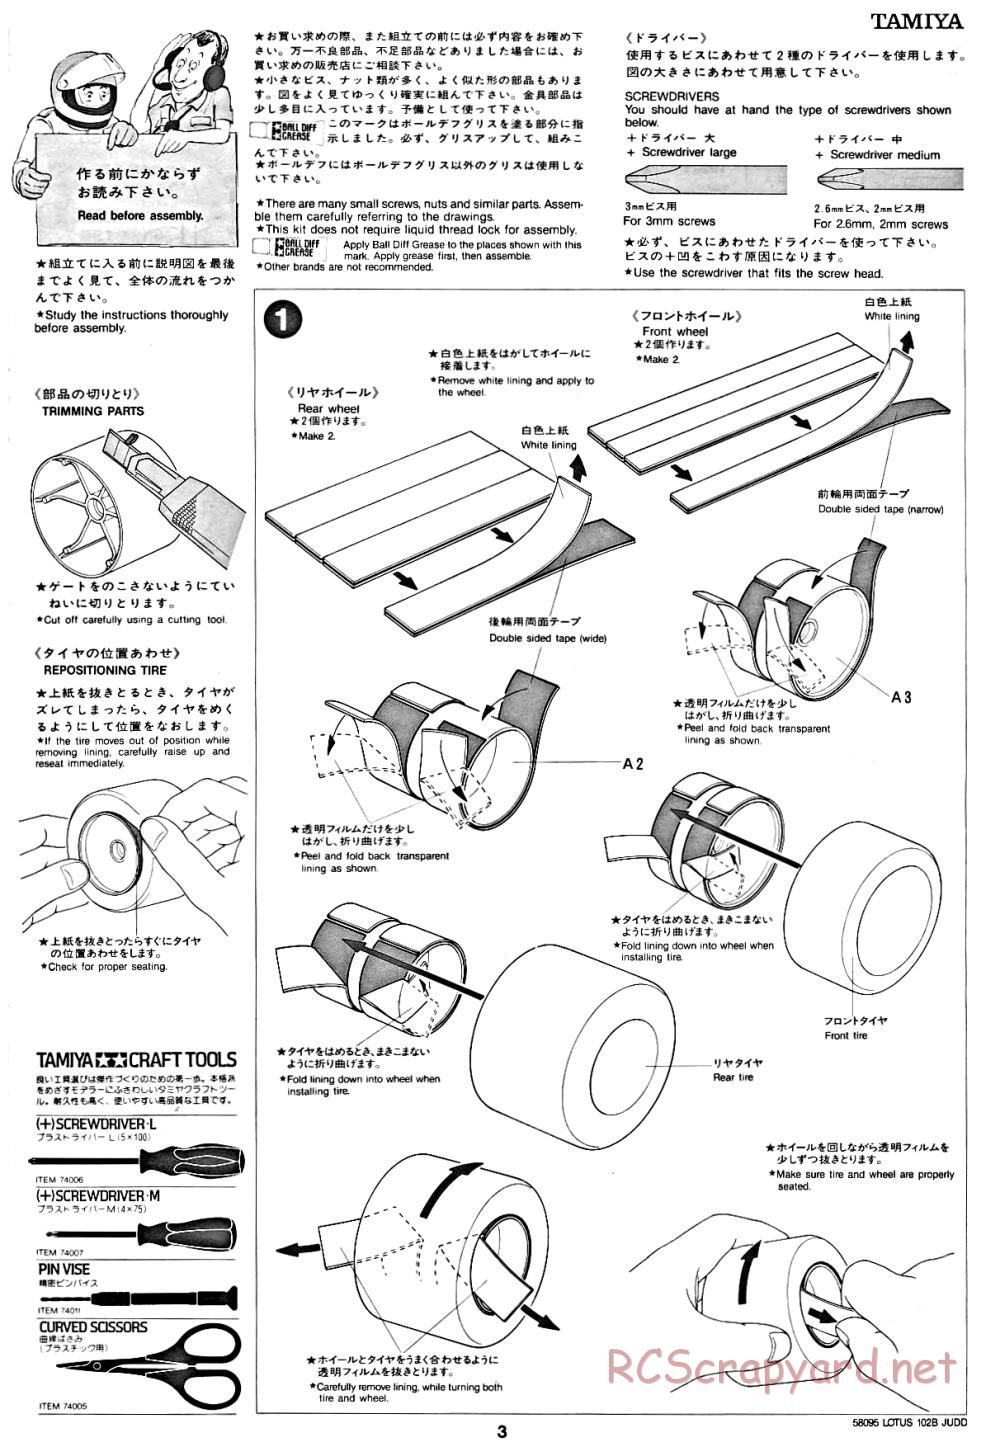 Tamiya - Lotus 102B Judd - 58095 - Manual - Page 3